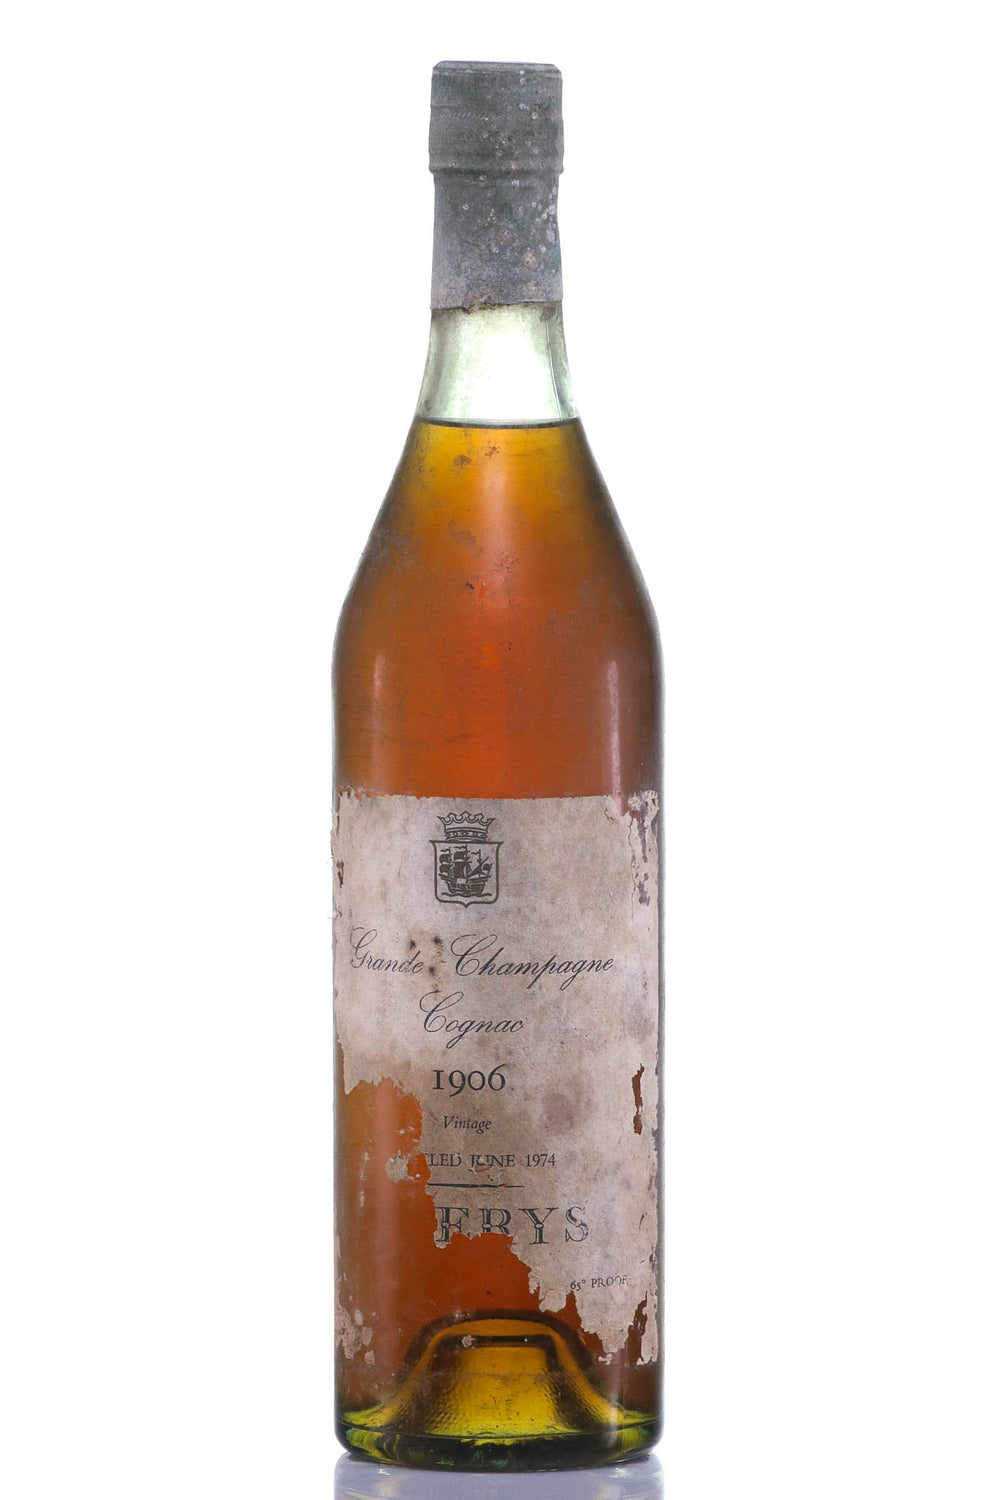 1906 Avery & Co Grande Champagne Cognac, Bottled 1974 - Rue Pinard